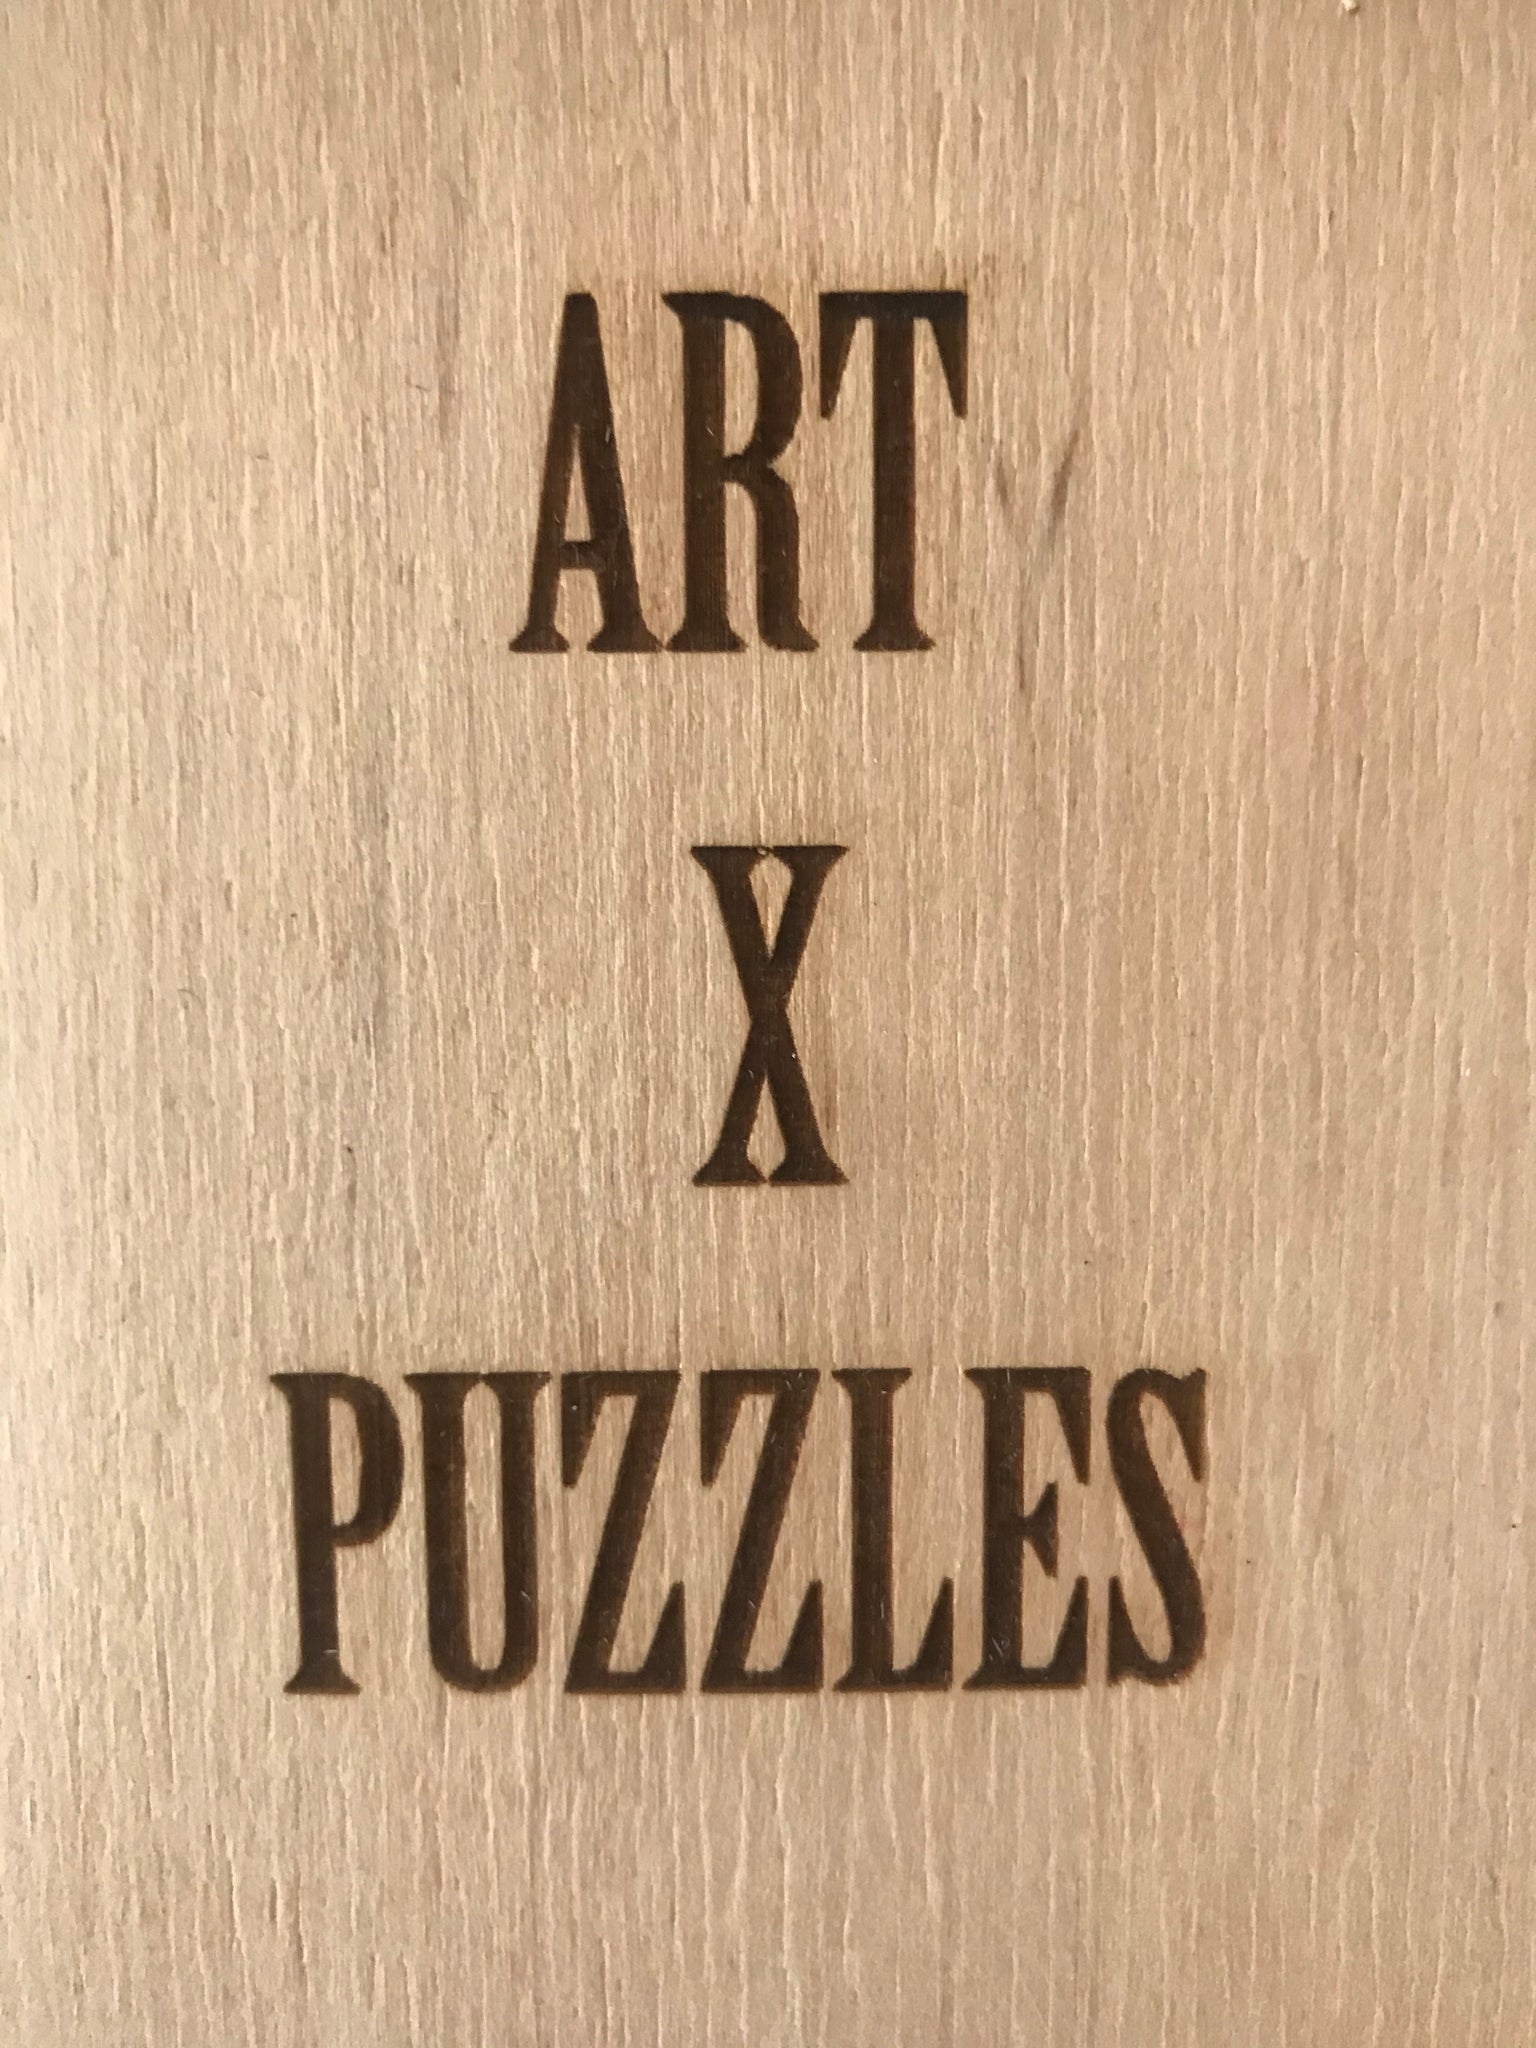 Artist Jennifer Coates Collector Edition  Jigsaw Puzzle